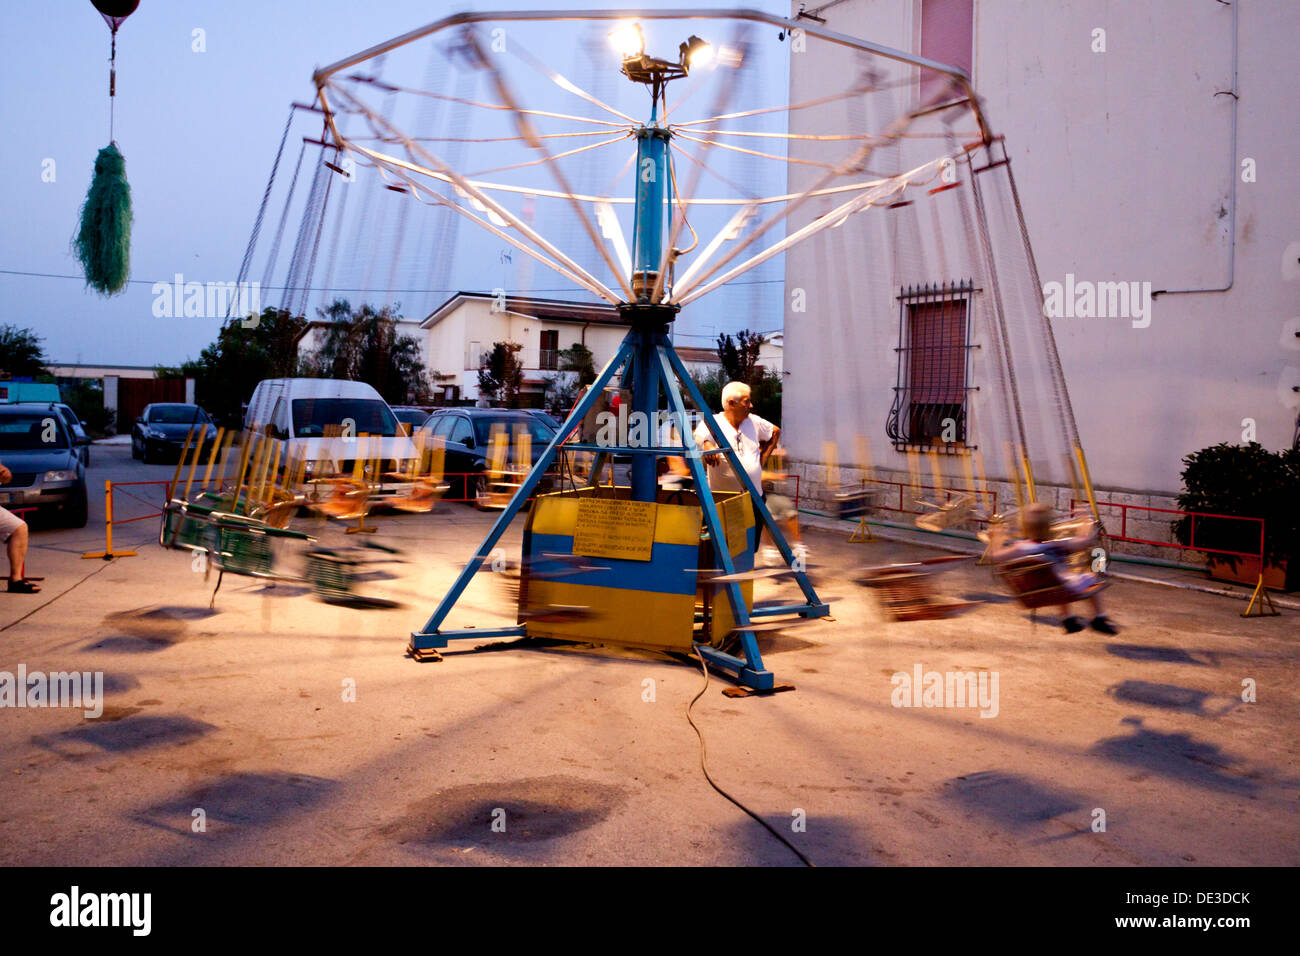 Babies get fun on old carousel seats. Loconia, Italy Stock Photo